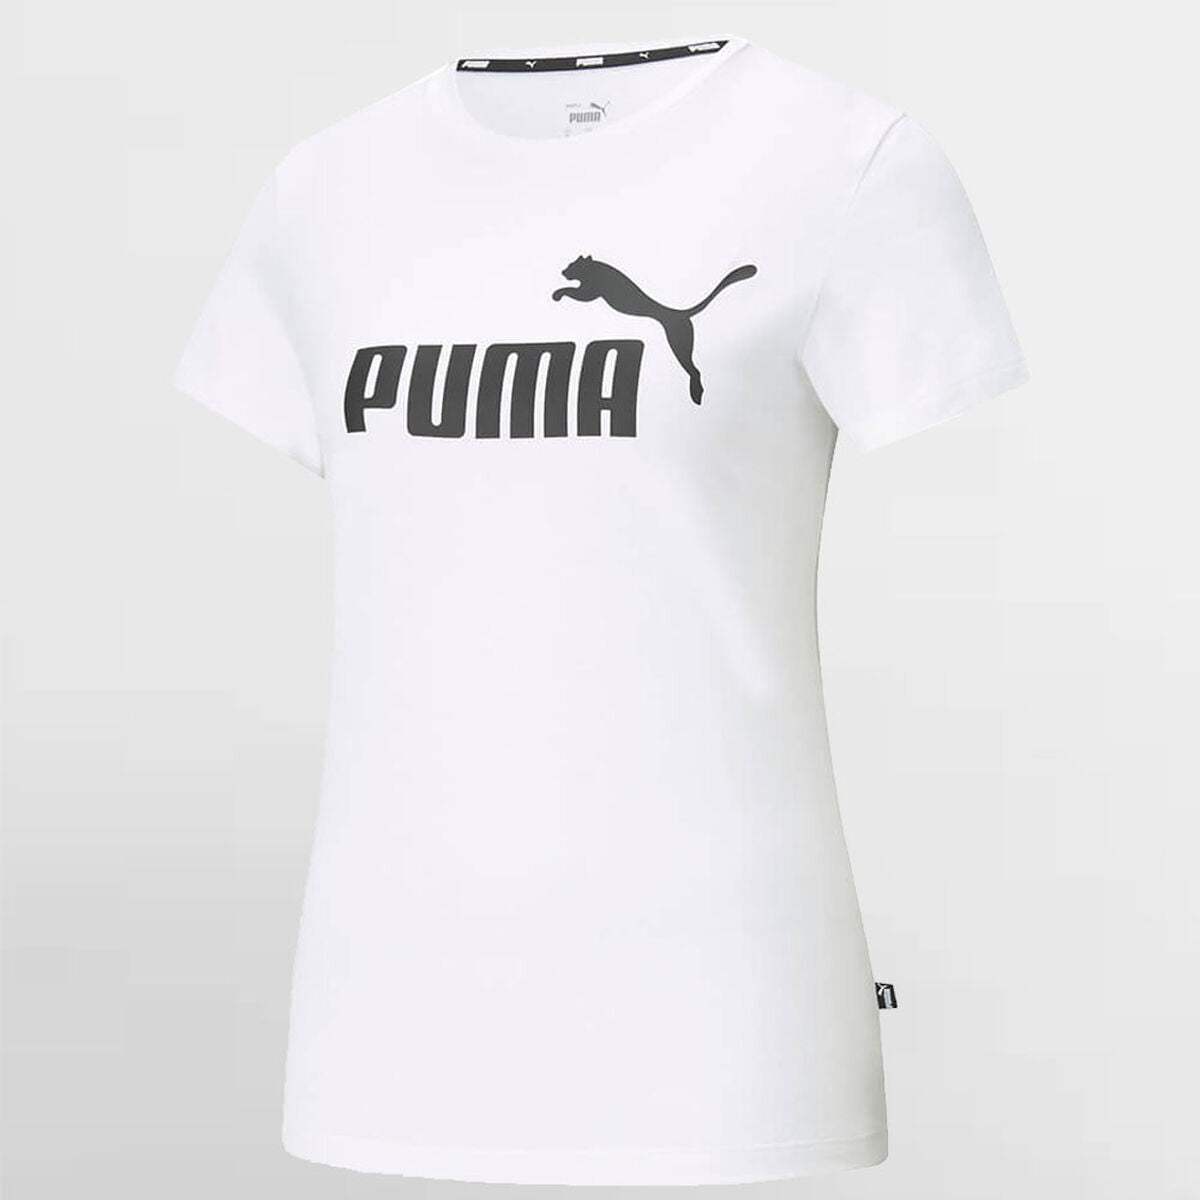 T-shirt à manches courtes femme Puma LOGO TEE 586774 02 Blanc - Puma - Jardin D'Eyden - jardindeyden.fr